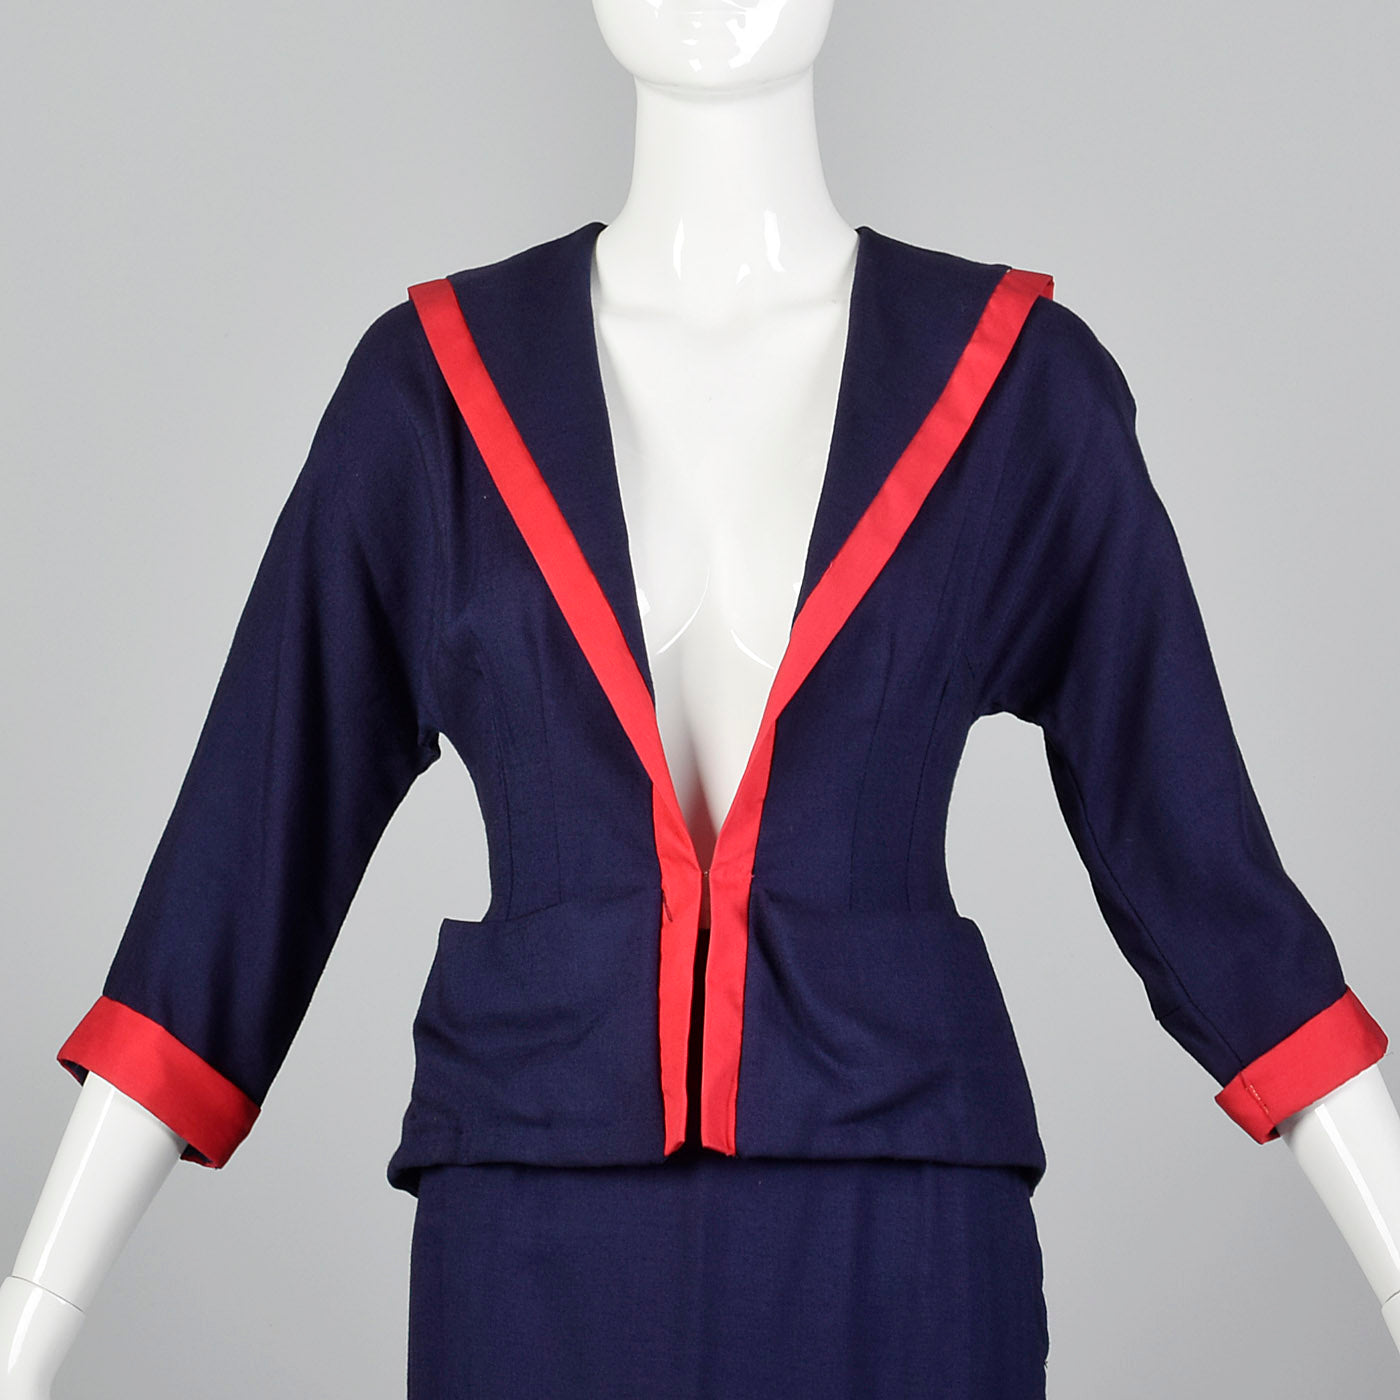 1950s Navy Sailor Style Skirt Suit